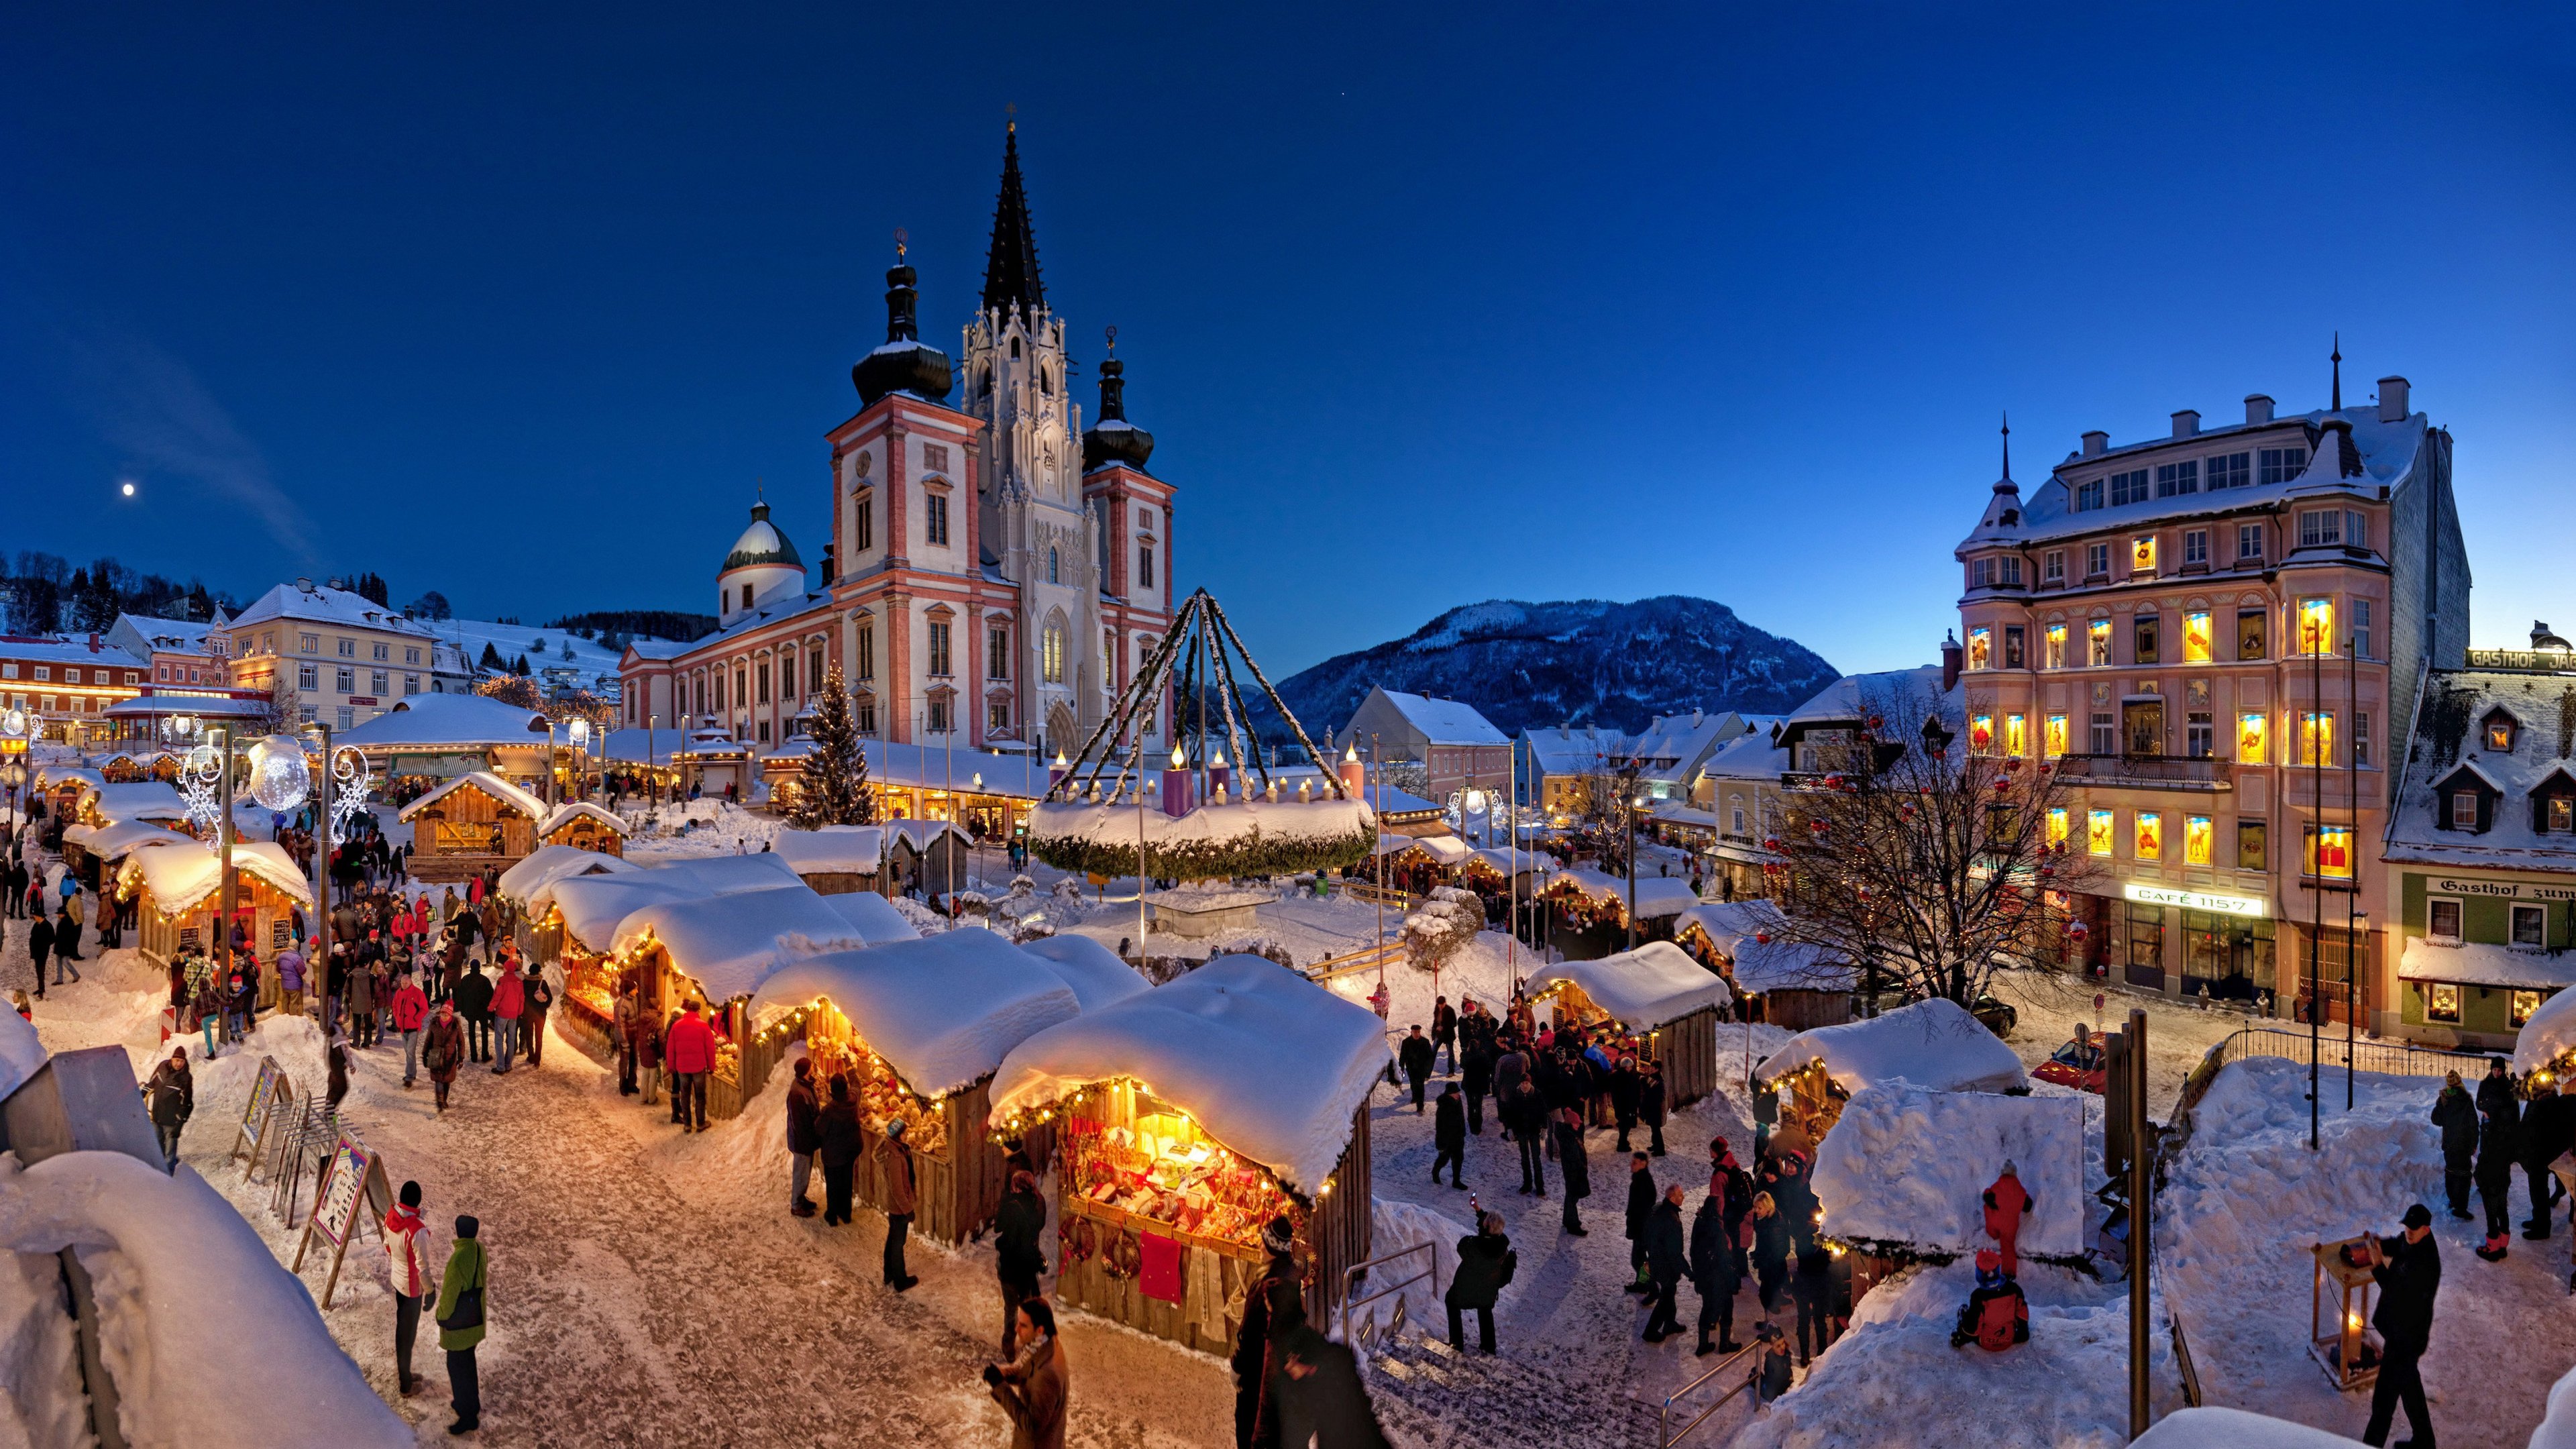 snow, decoration, market, people, night, square, light, christmas, holiday, building, city